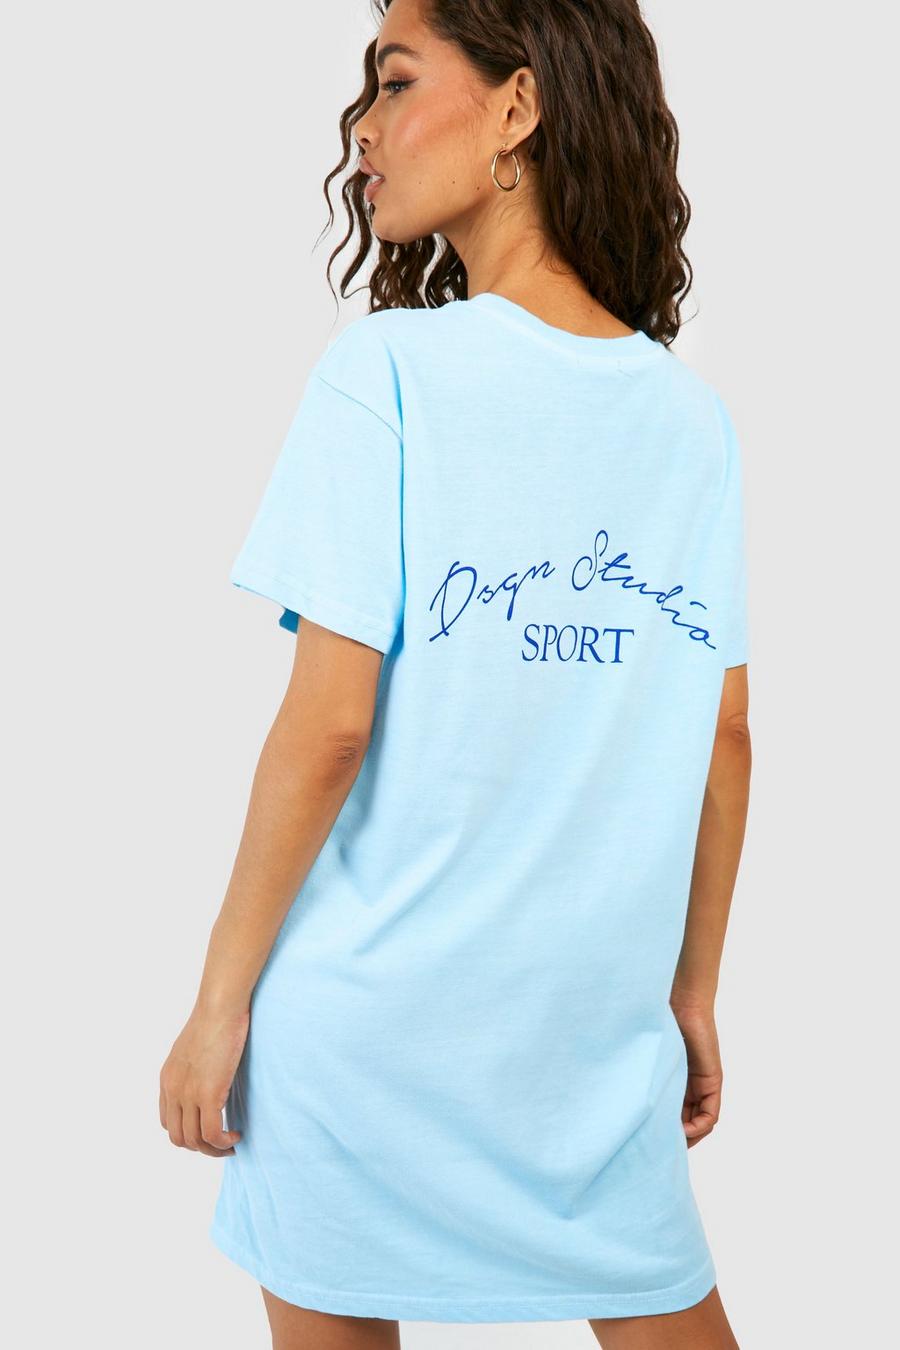 Light blue Design Studio Sport Oversized T-shirt Dress